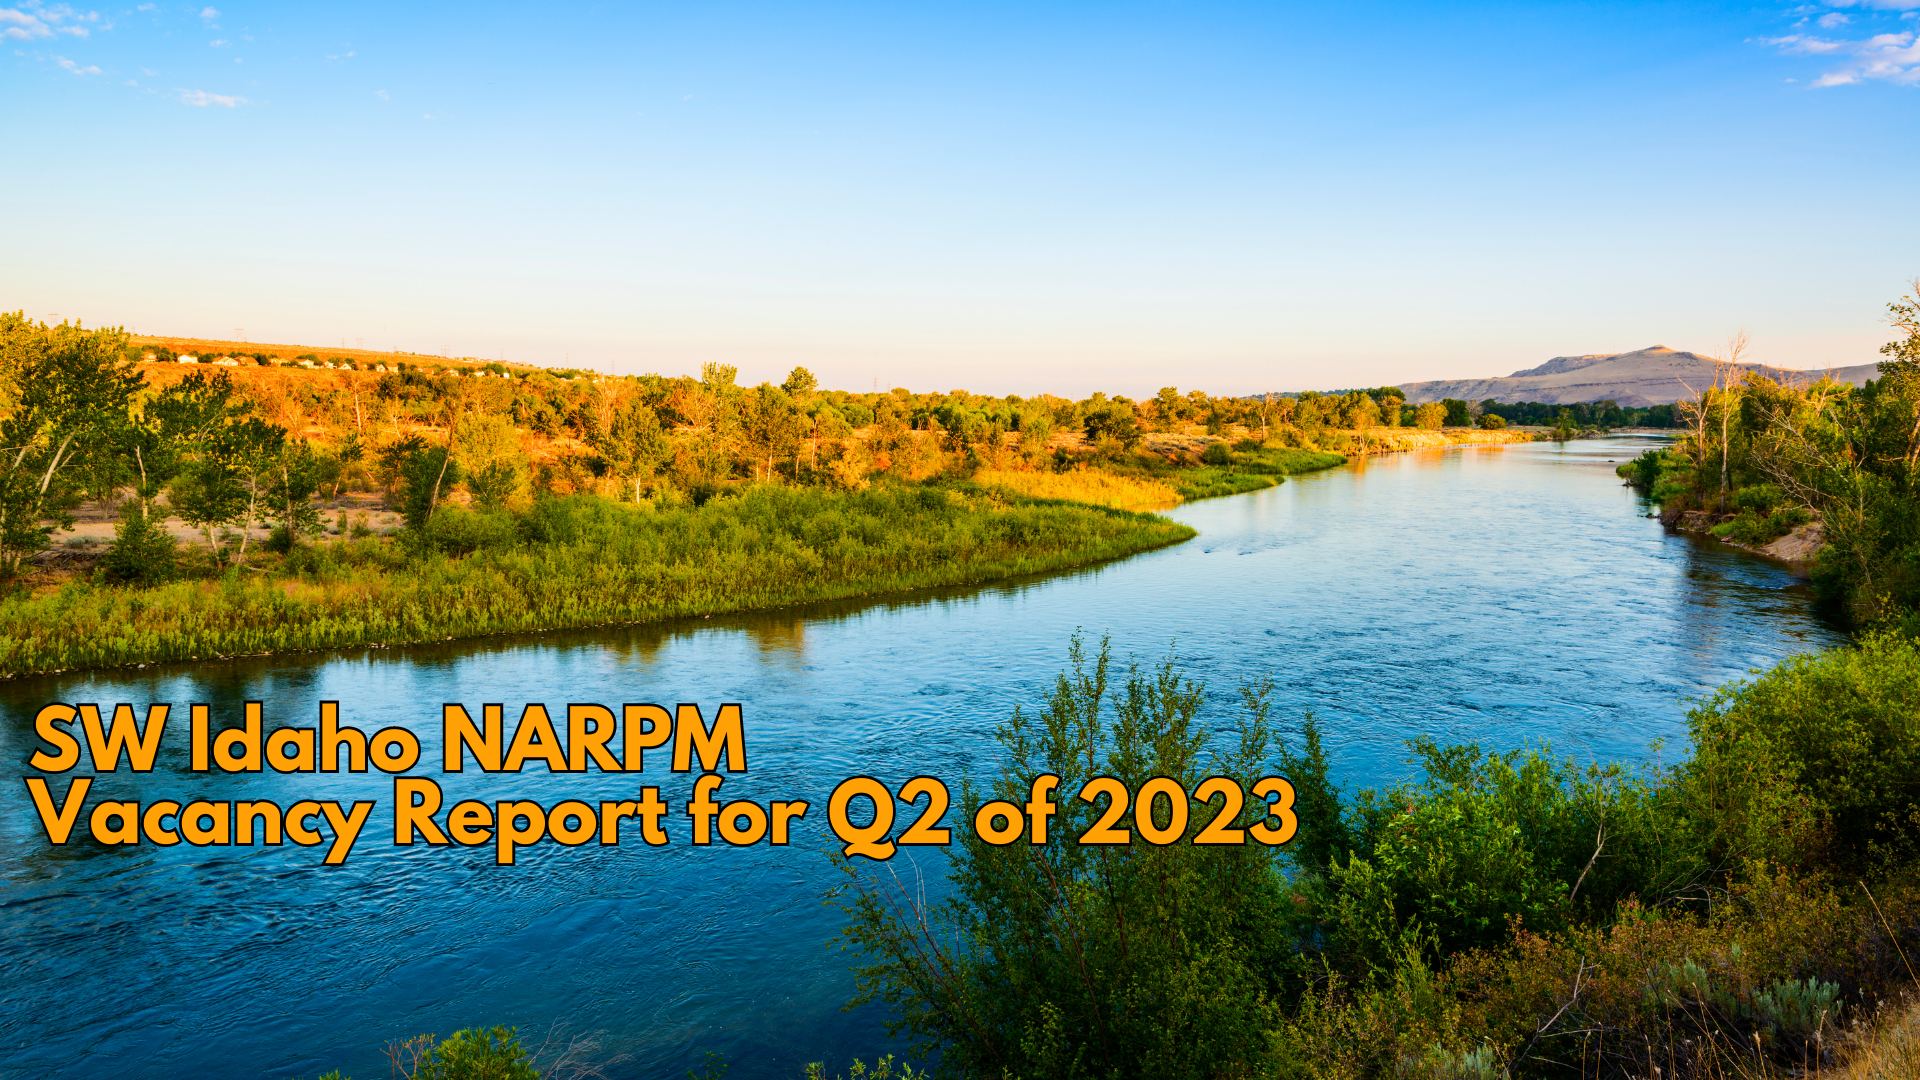 SW Idaho NARPM Vacancy Report for Q2 of 2023